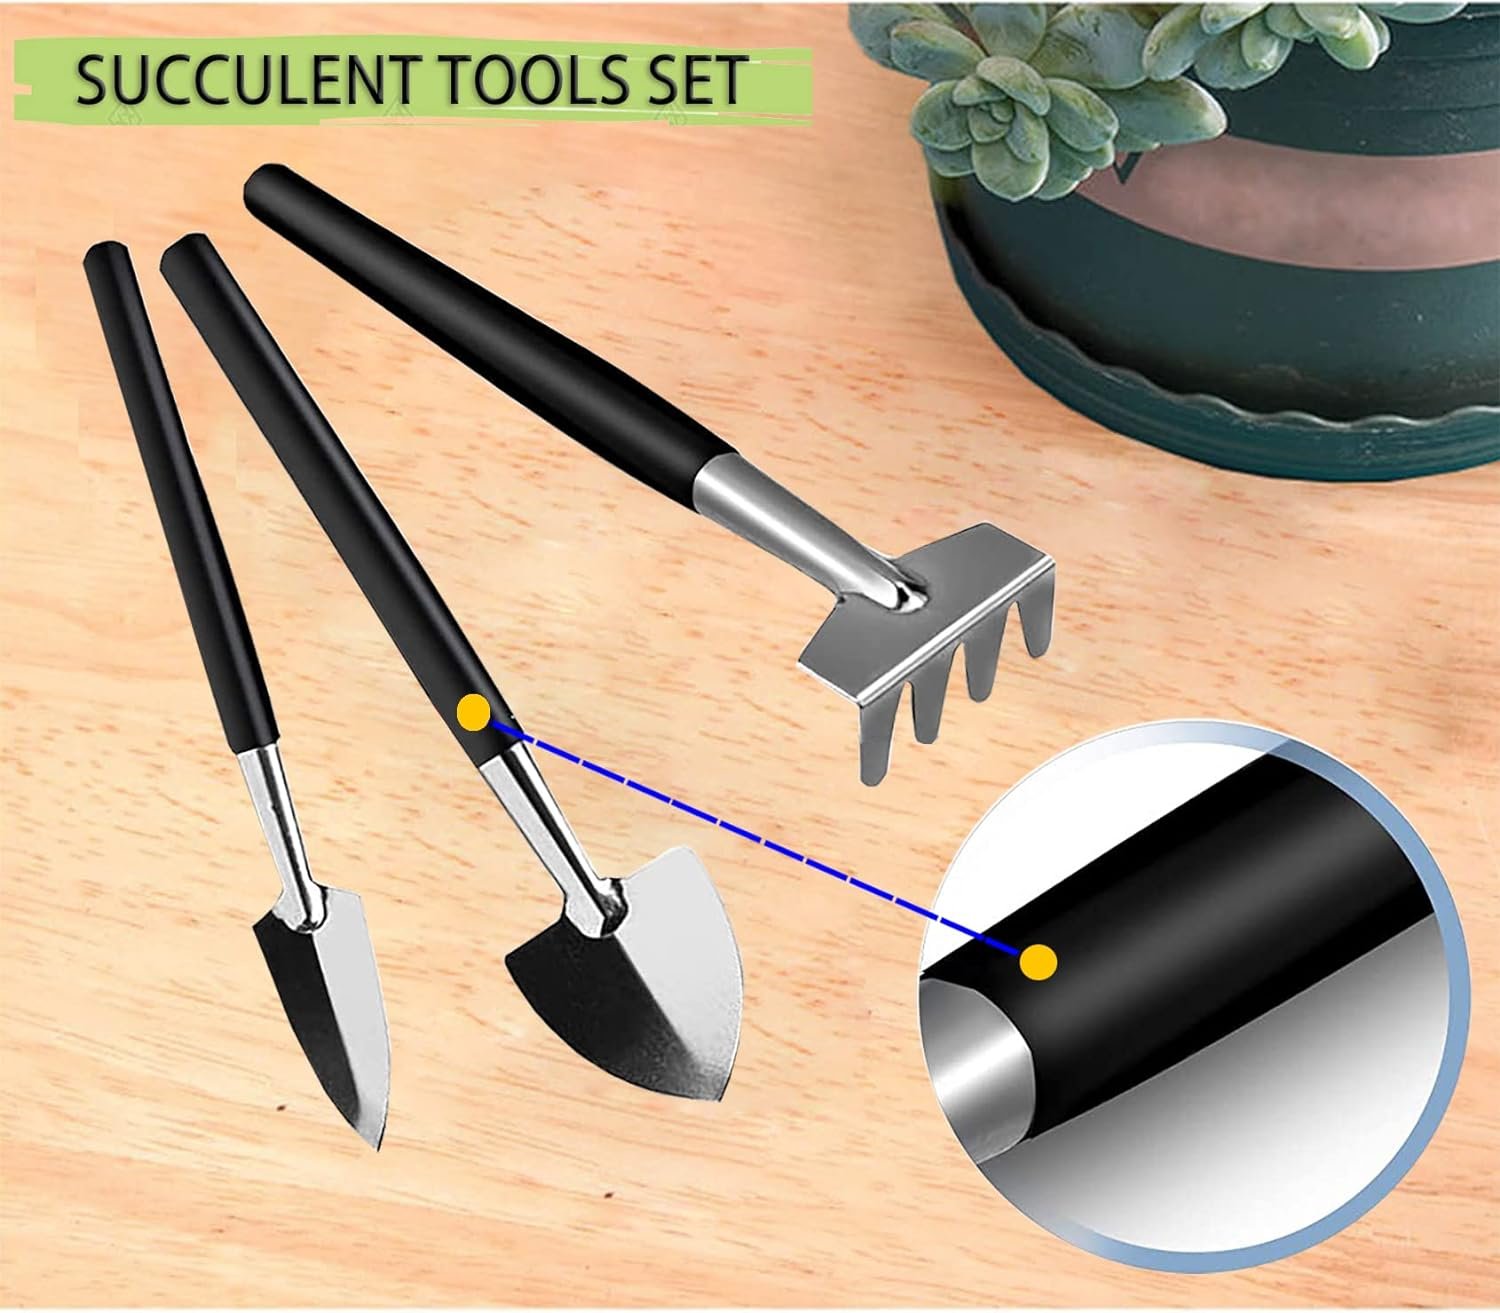 Wobodan 12 Pcs Succulent Tools Set Mini Transplanting Garden Tools Kit for Indoor Gardening Flower Pot Cactus Care